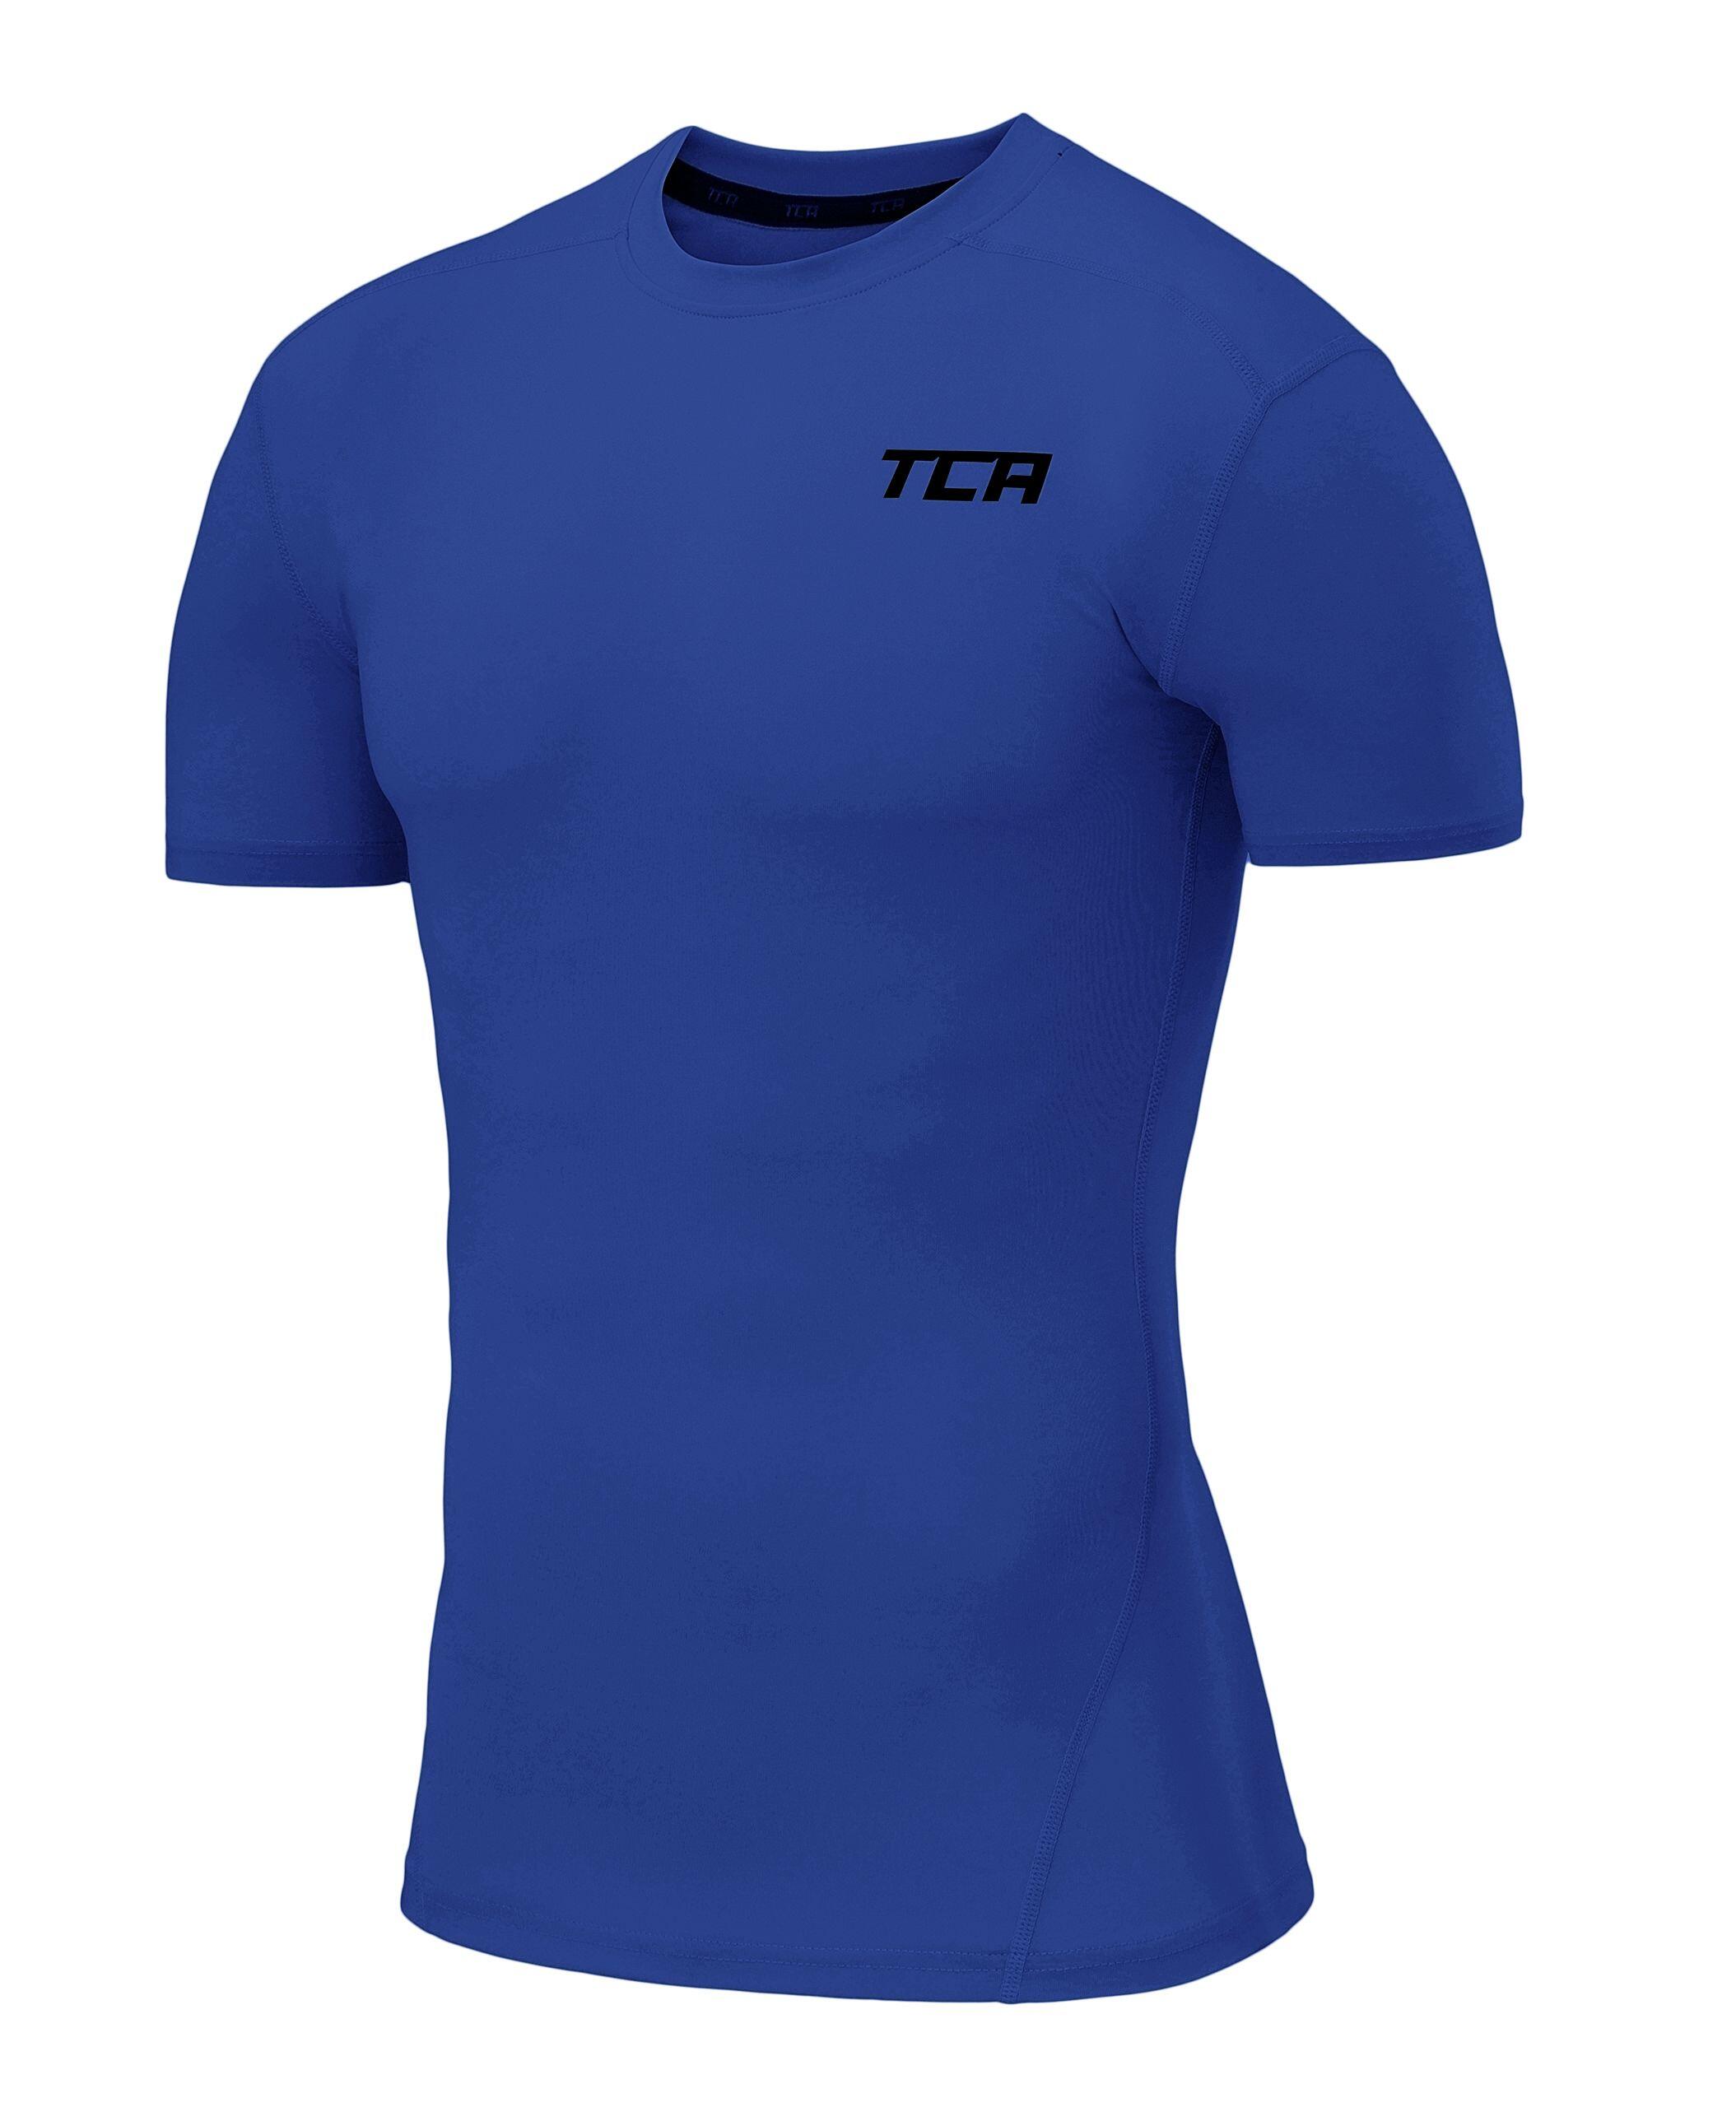 TCA Boys' Performance Base Layer Compression T-shirt - Dazzling Blue